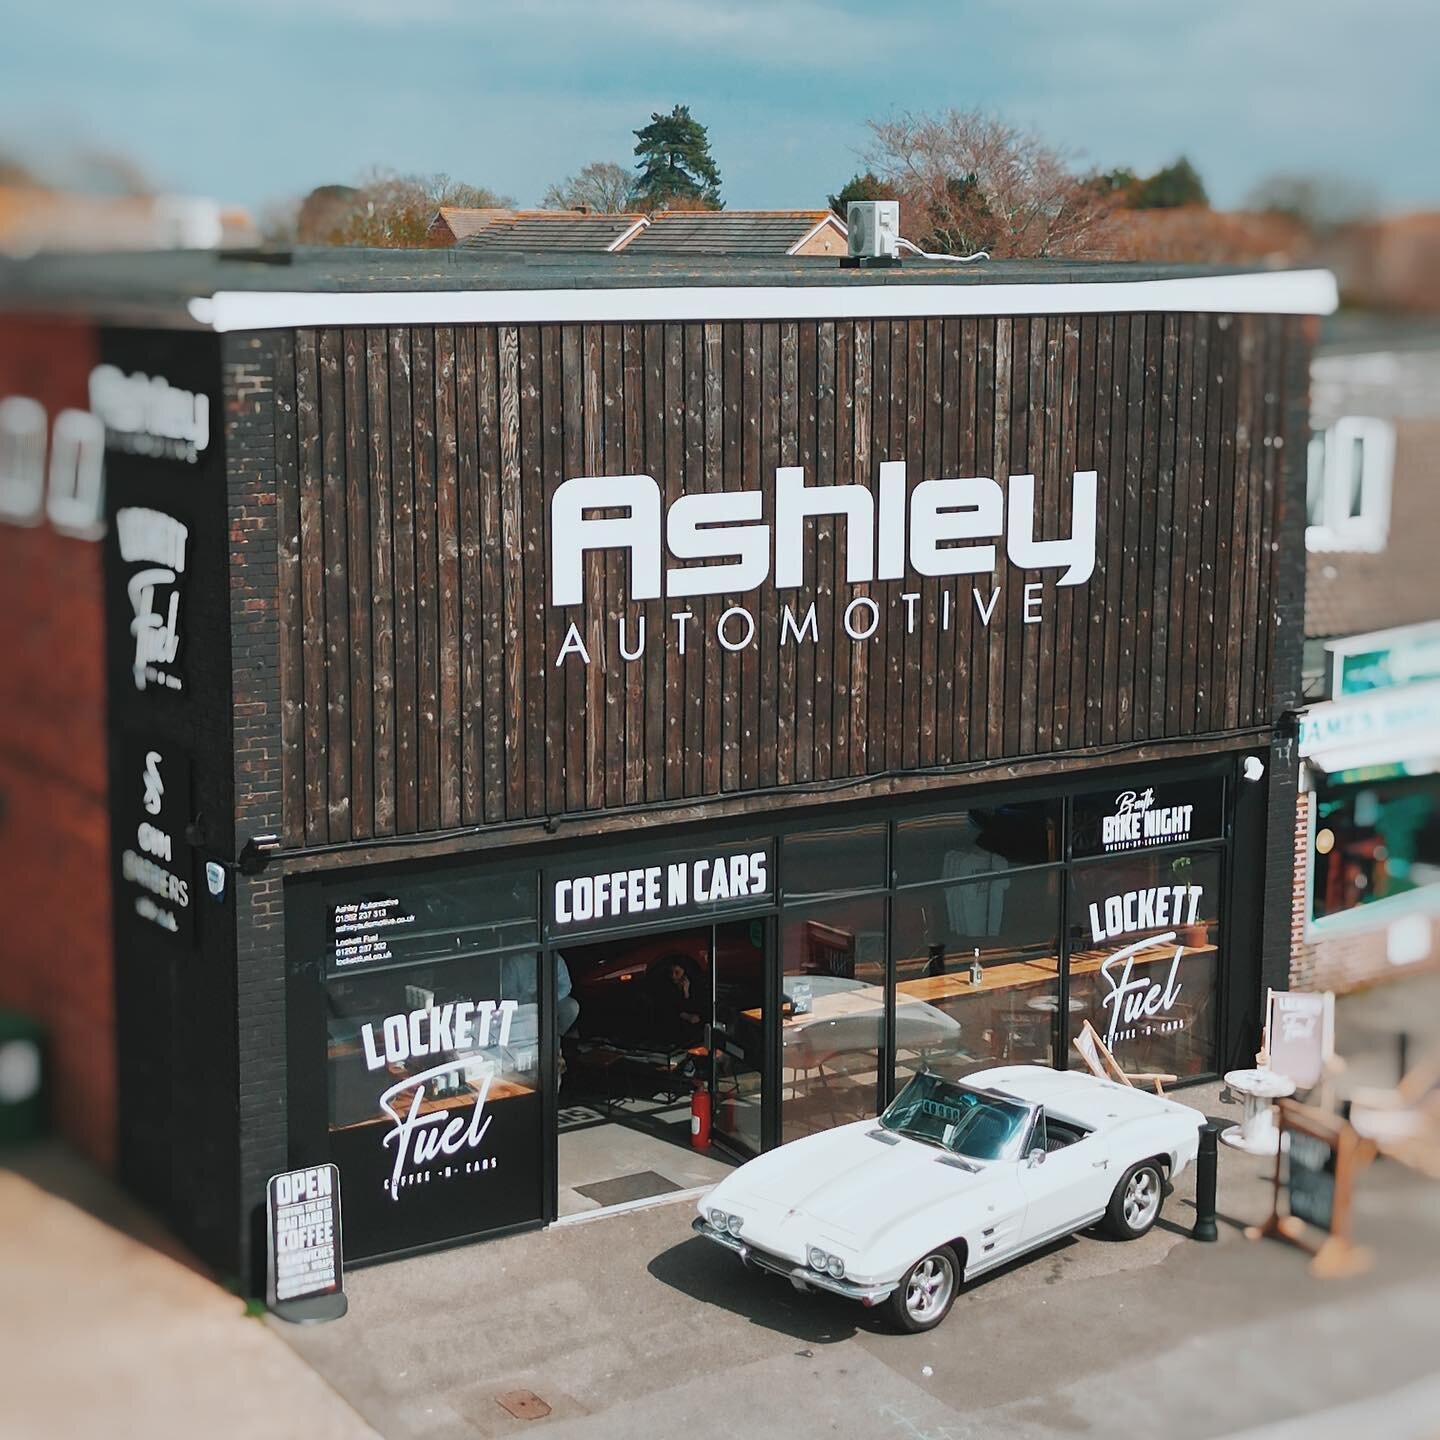 Caffeine &amp; American Muscle Machines

🚗: 1964 Corvette C2 Stingray 

☕️: serving @badhandcoffee 

#lockettfuel #ashleyautomotive #coffeeshop #coffeelover #classiccars #americanmuscle #carsofinstagram #cargram